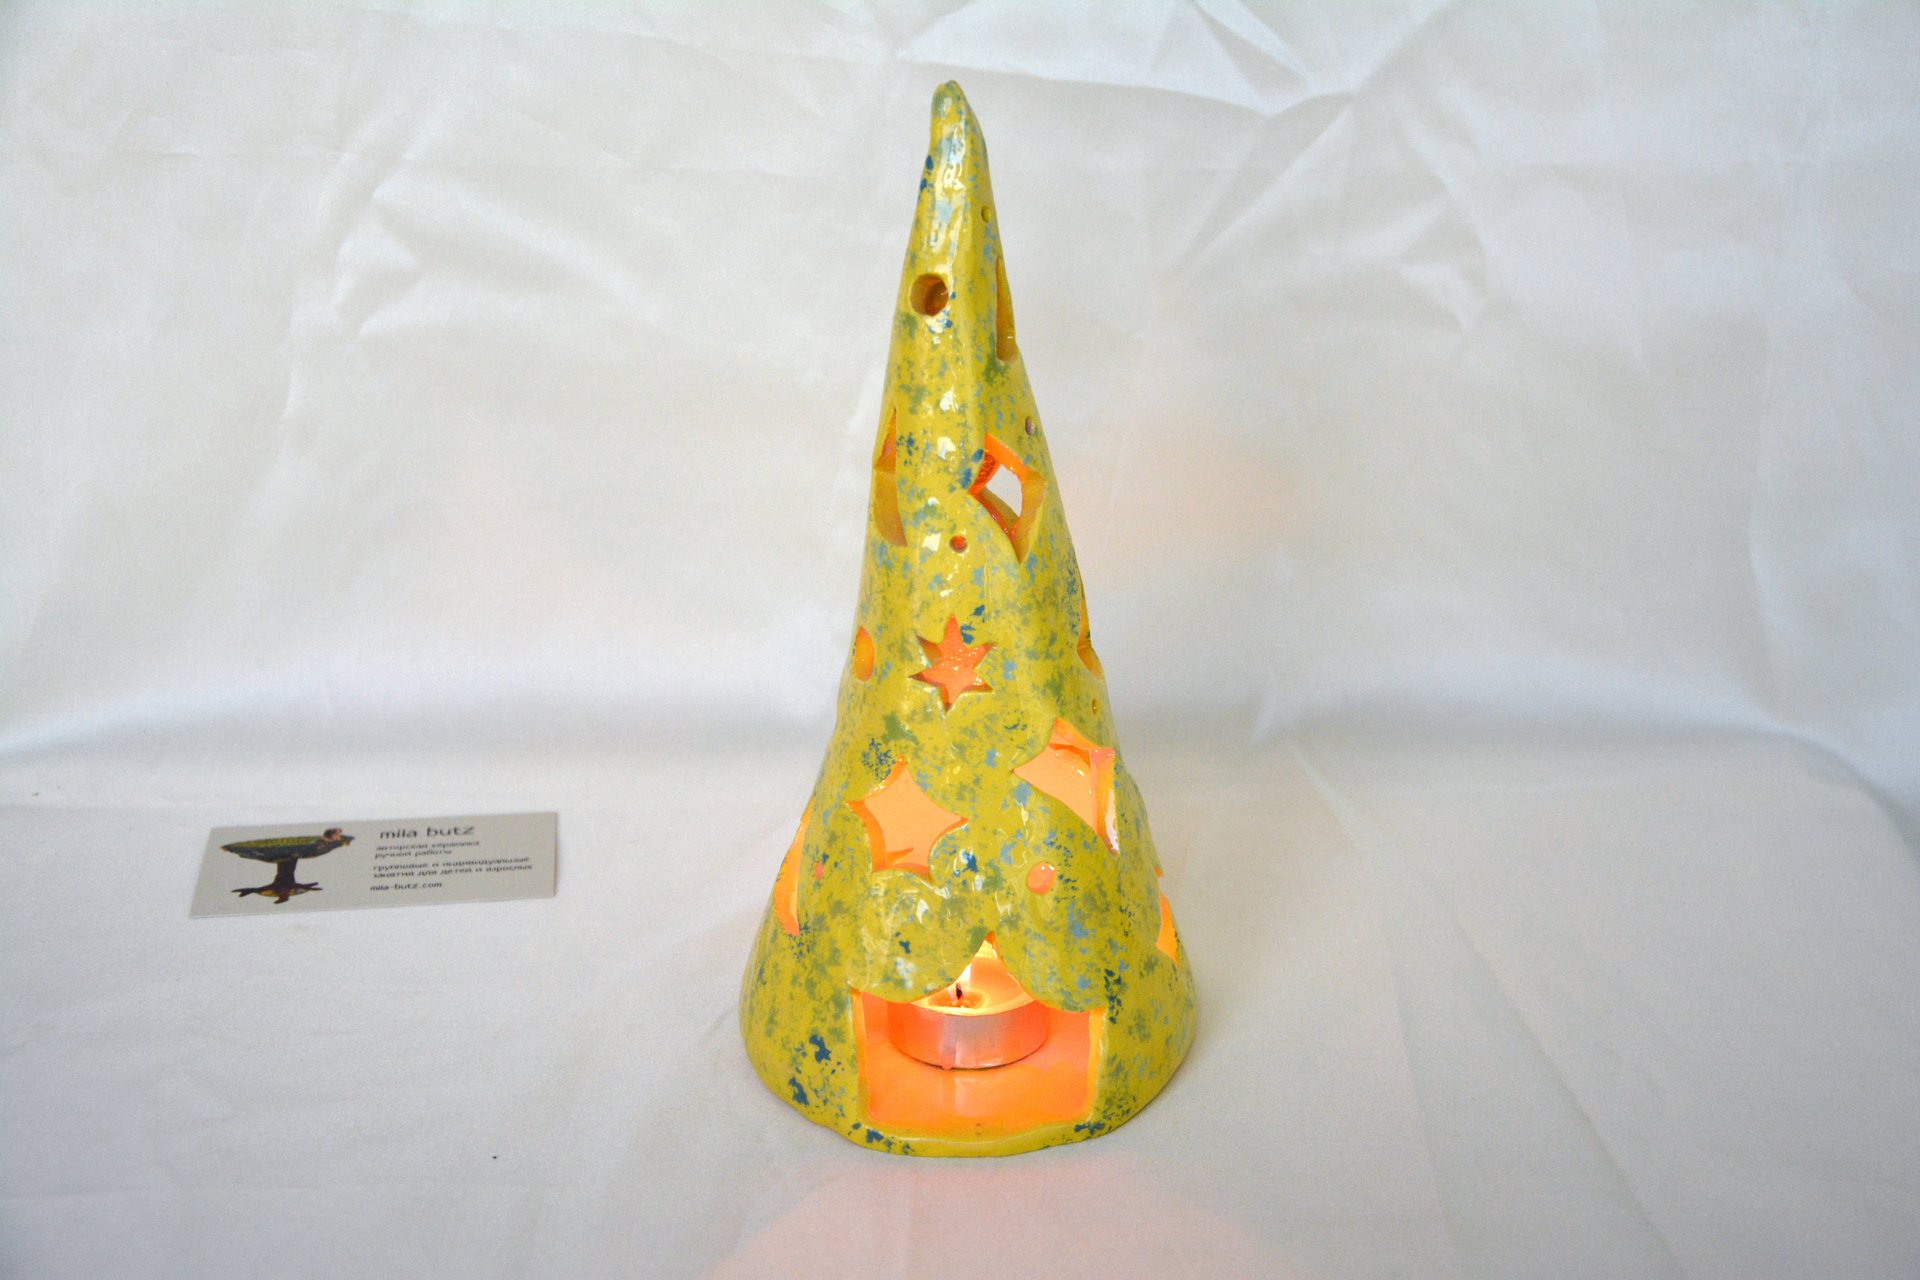 Night light Yellow cone - Ceramic Candl-holders, height - 25 cm, photo 3 of 3.